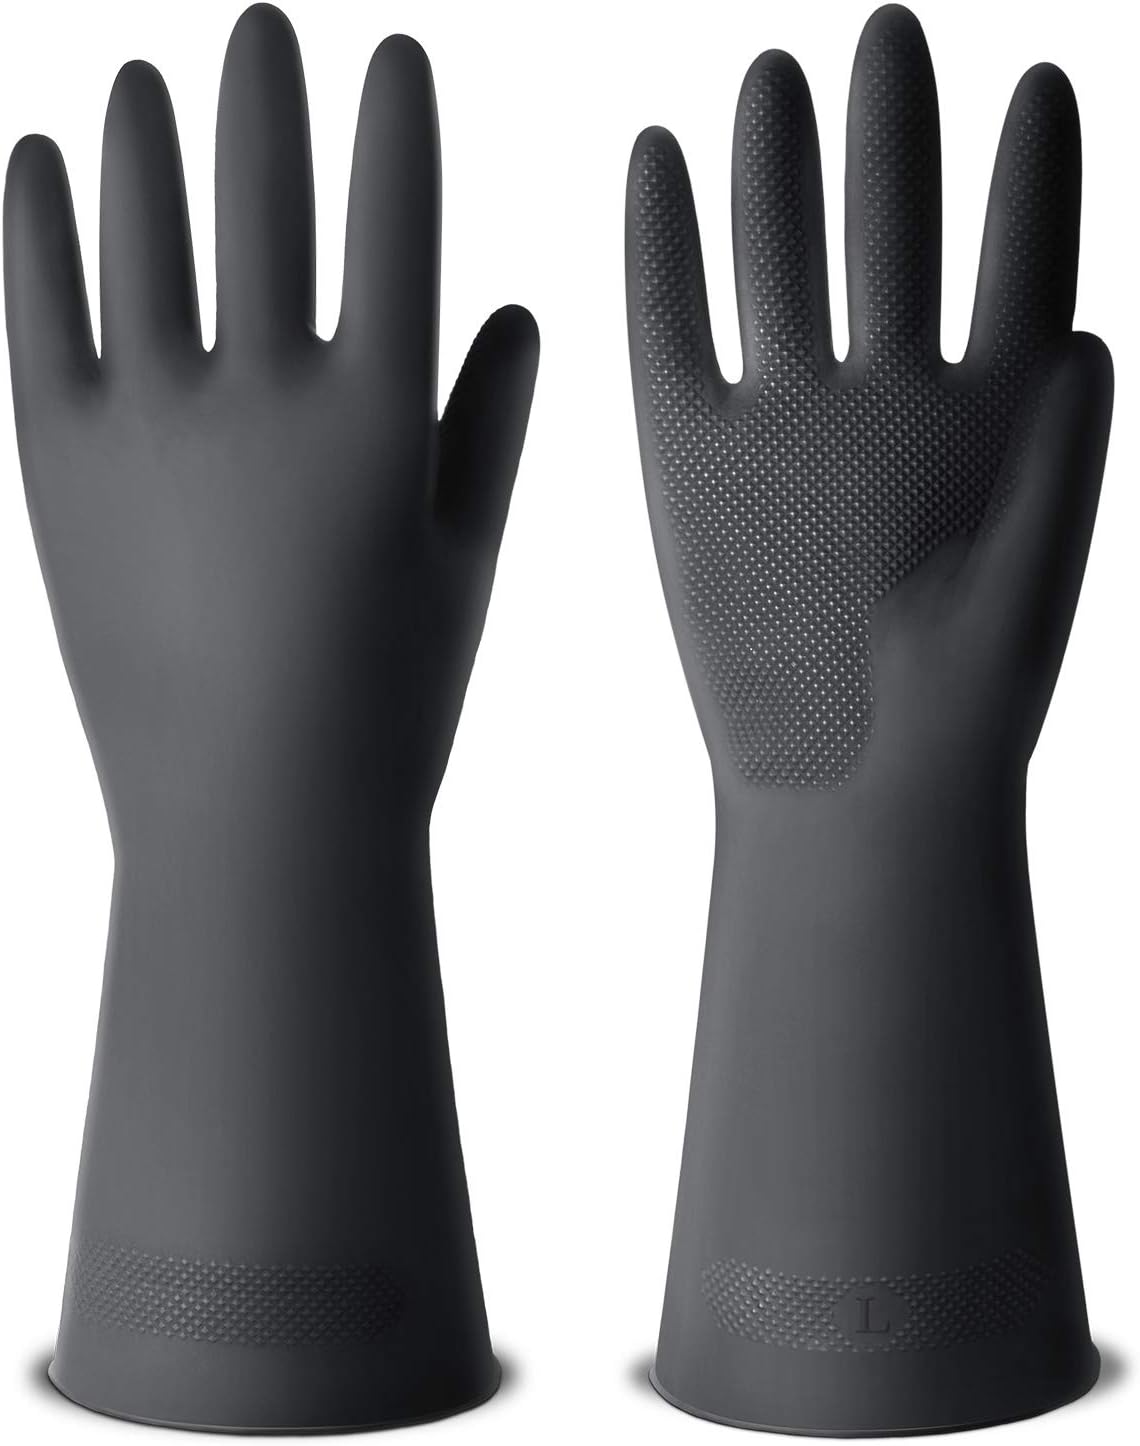 ThxToms Dishwashing Gloves, 3 Pairs Reusable Latex [...]